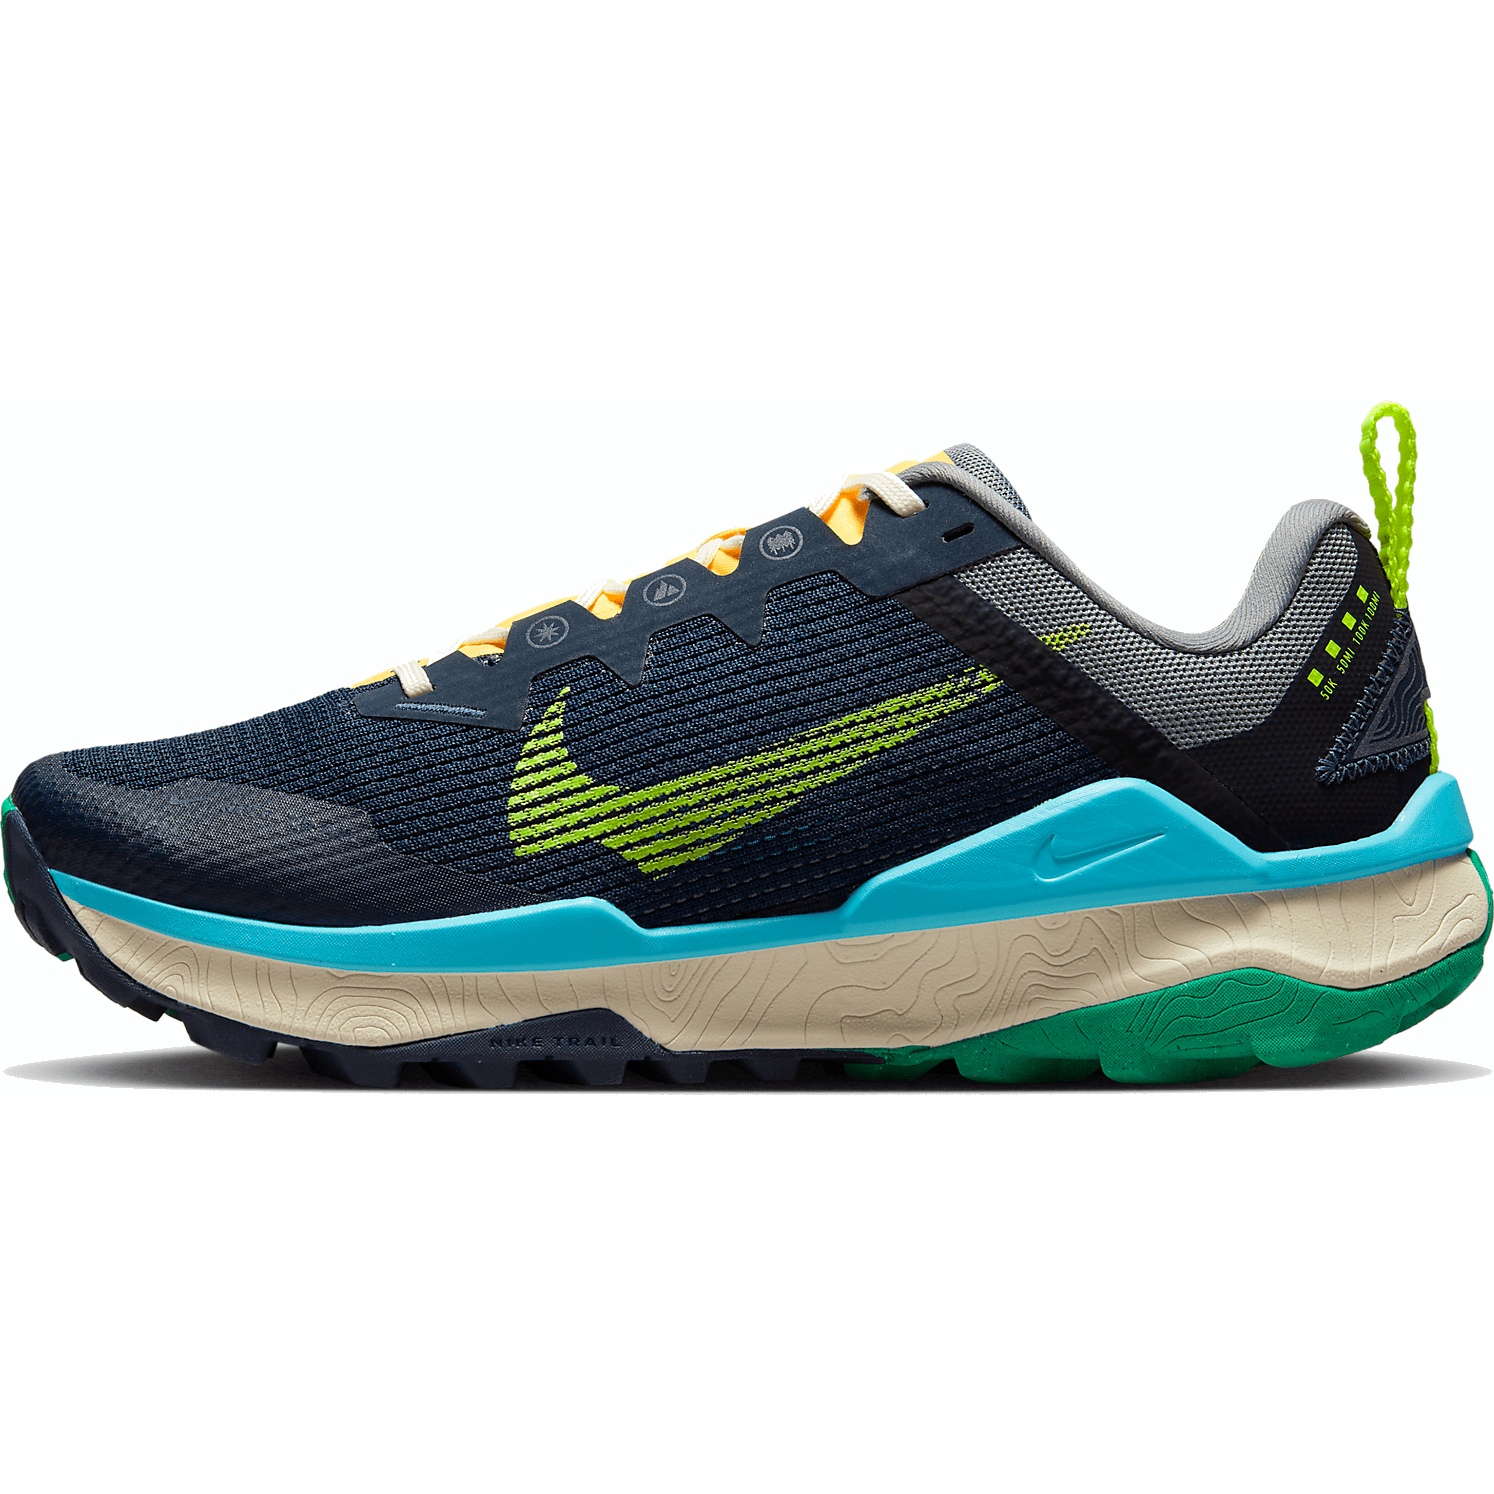 Immagine prodotto da Nike Scarpe da Trailrunning Donna - React Wildhorse 8 - obsidian/volt-cool grey-baltic blue DR2689-400